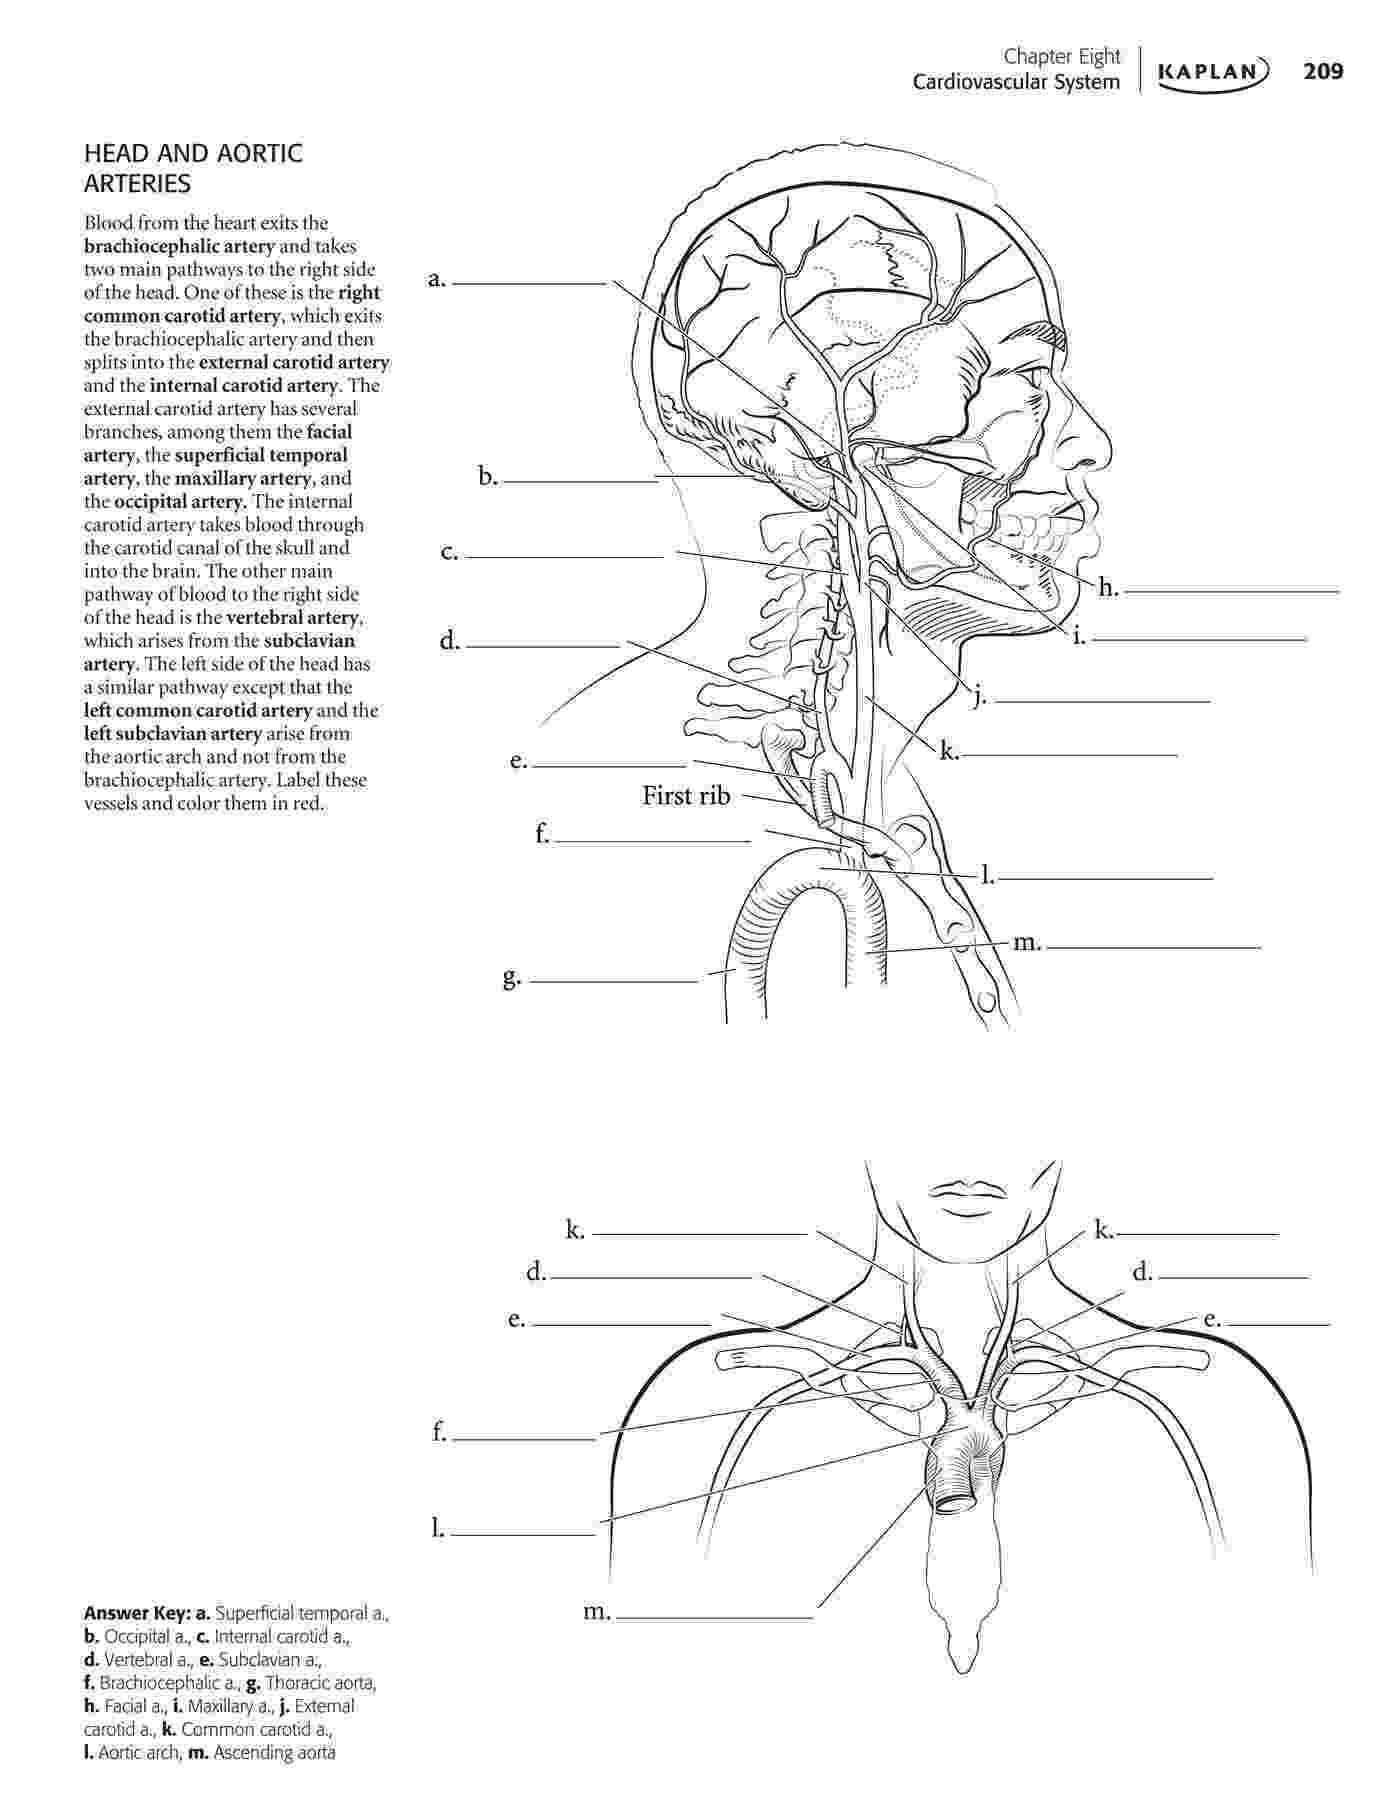 anatomy coloring book example kaplan anatomy coloring bookpdf boudli pinterest anatomy book example coloring 